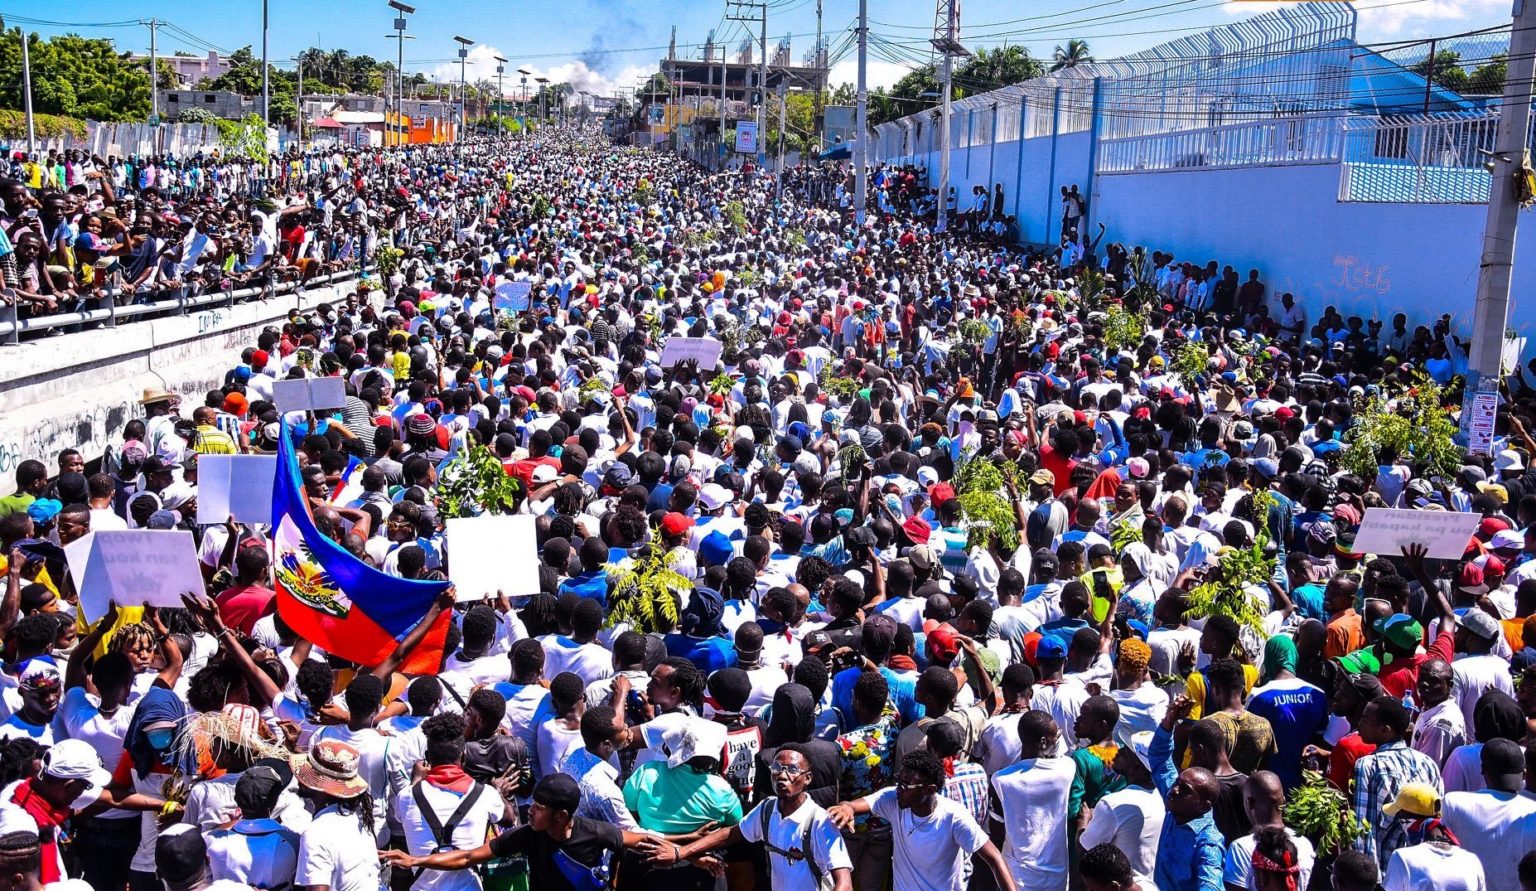 Manifestazione processi elettoriali Haiti